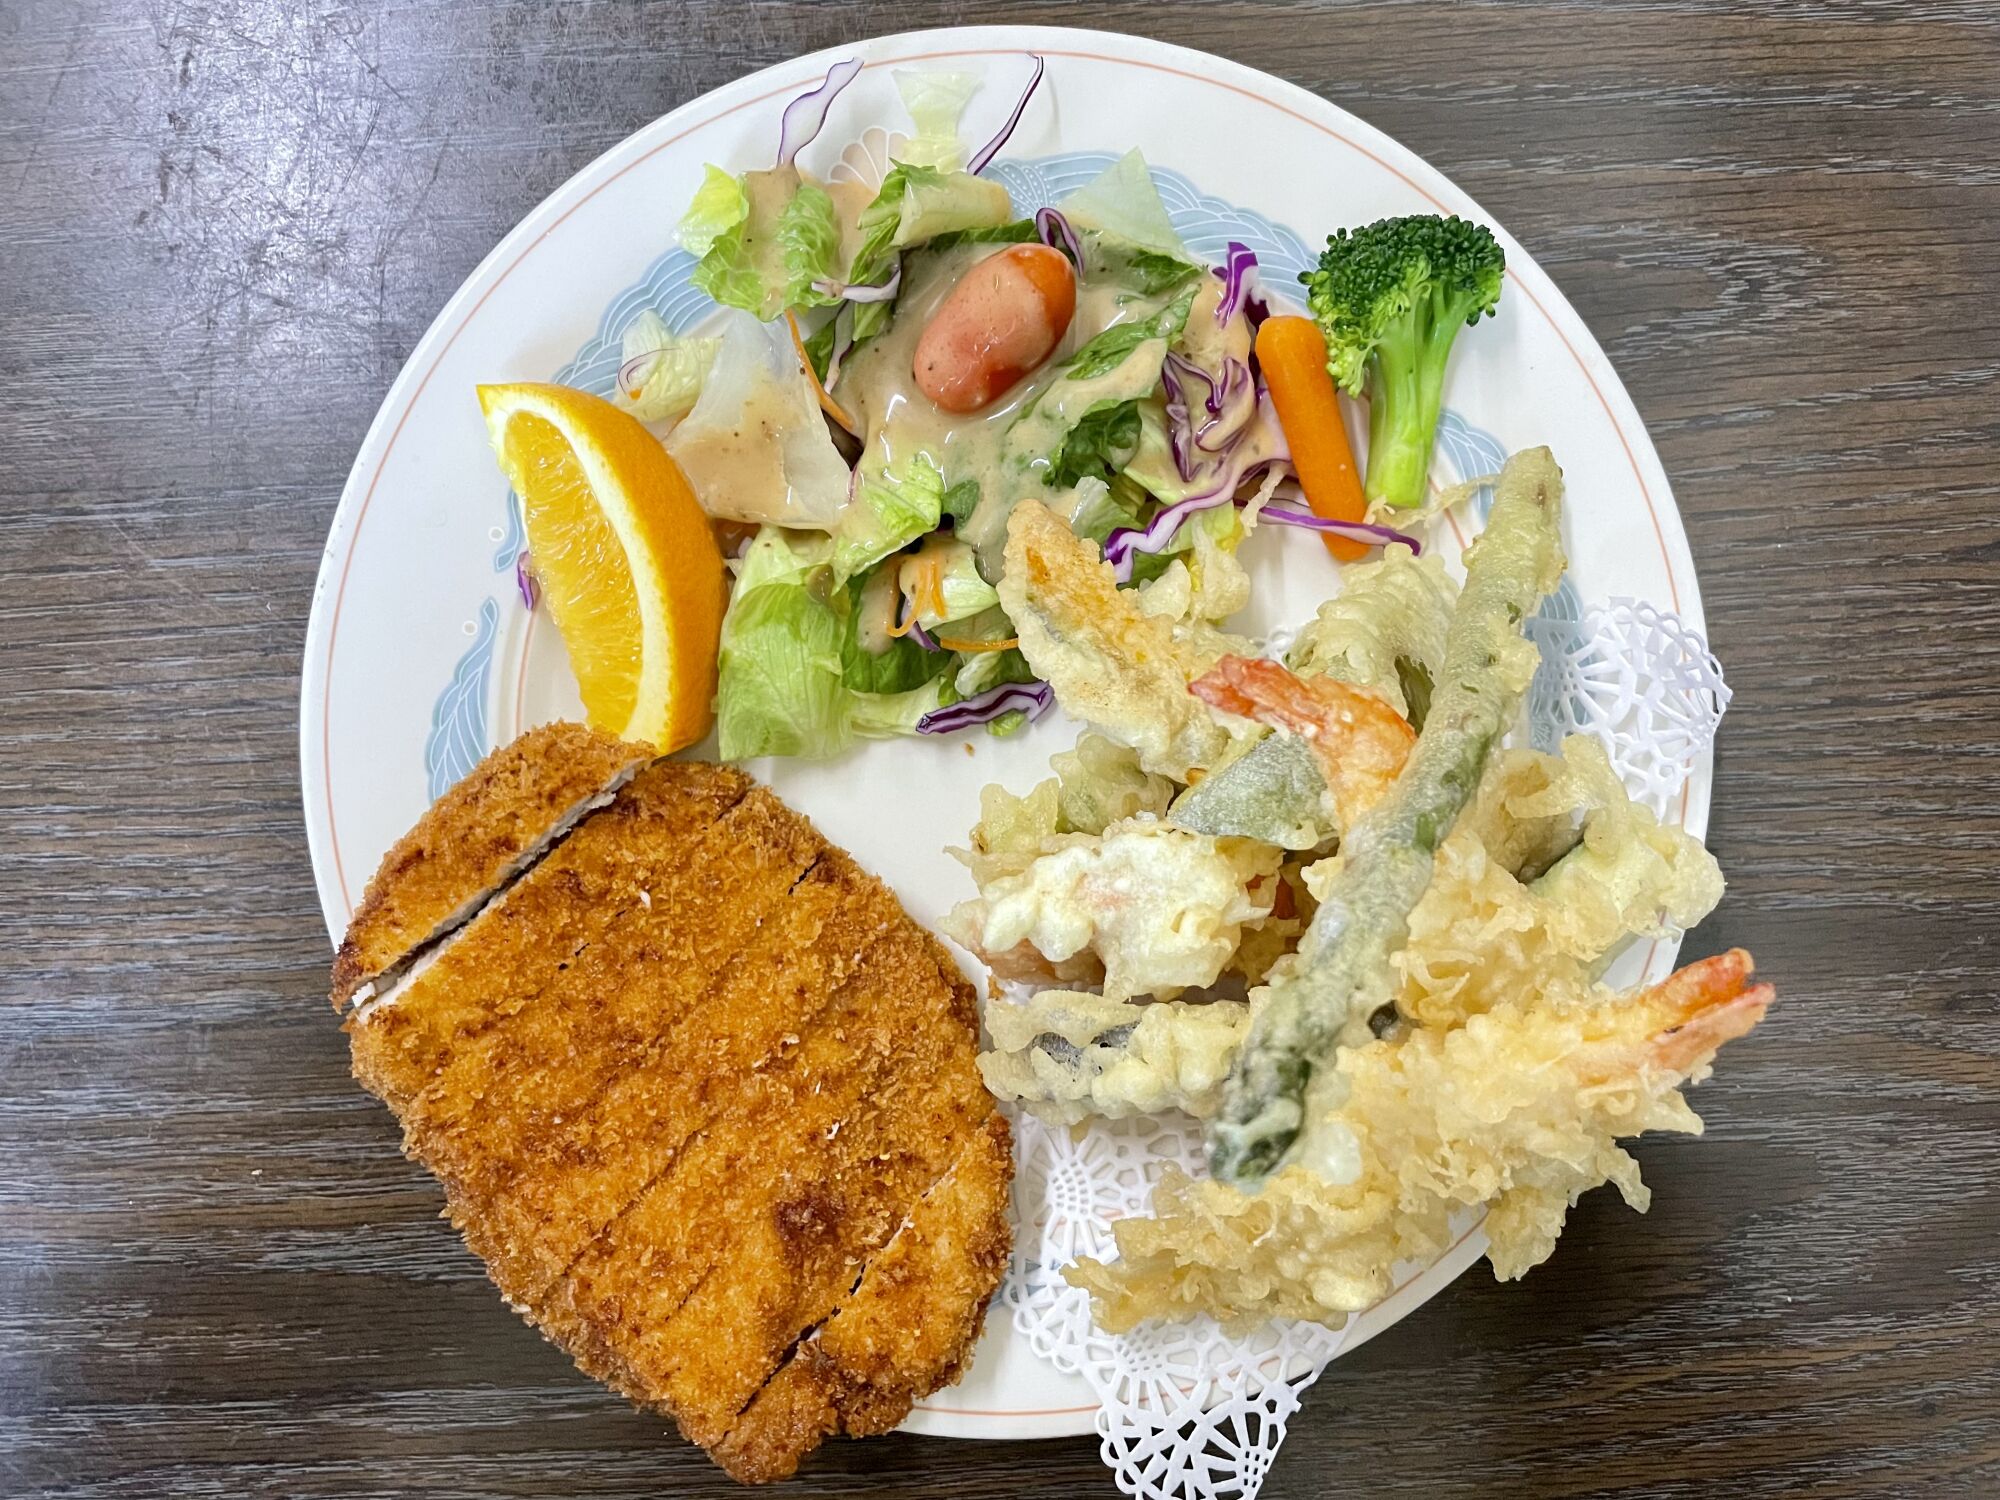 Pork katsu, tempura vegetables and salad on a combination plate.